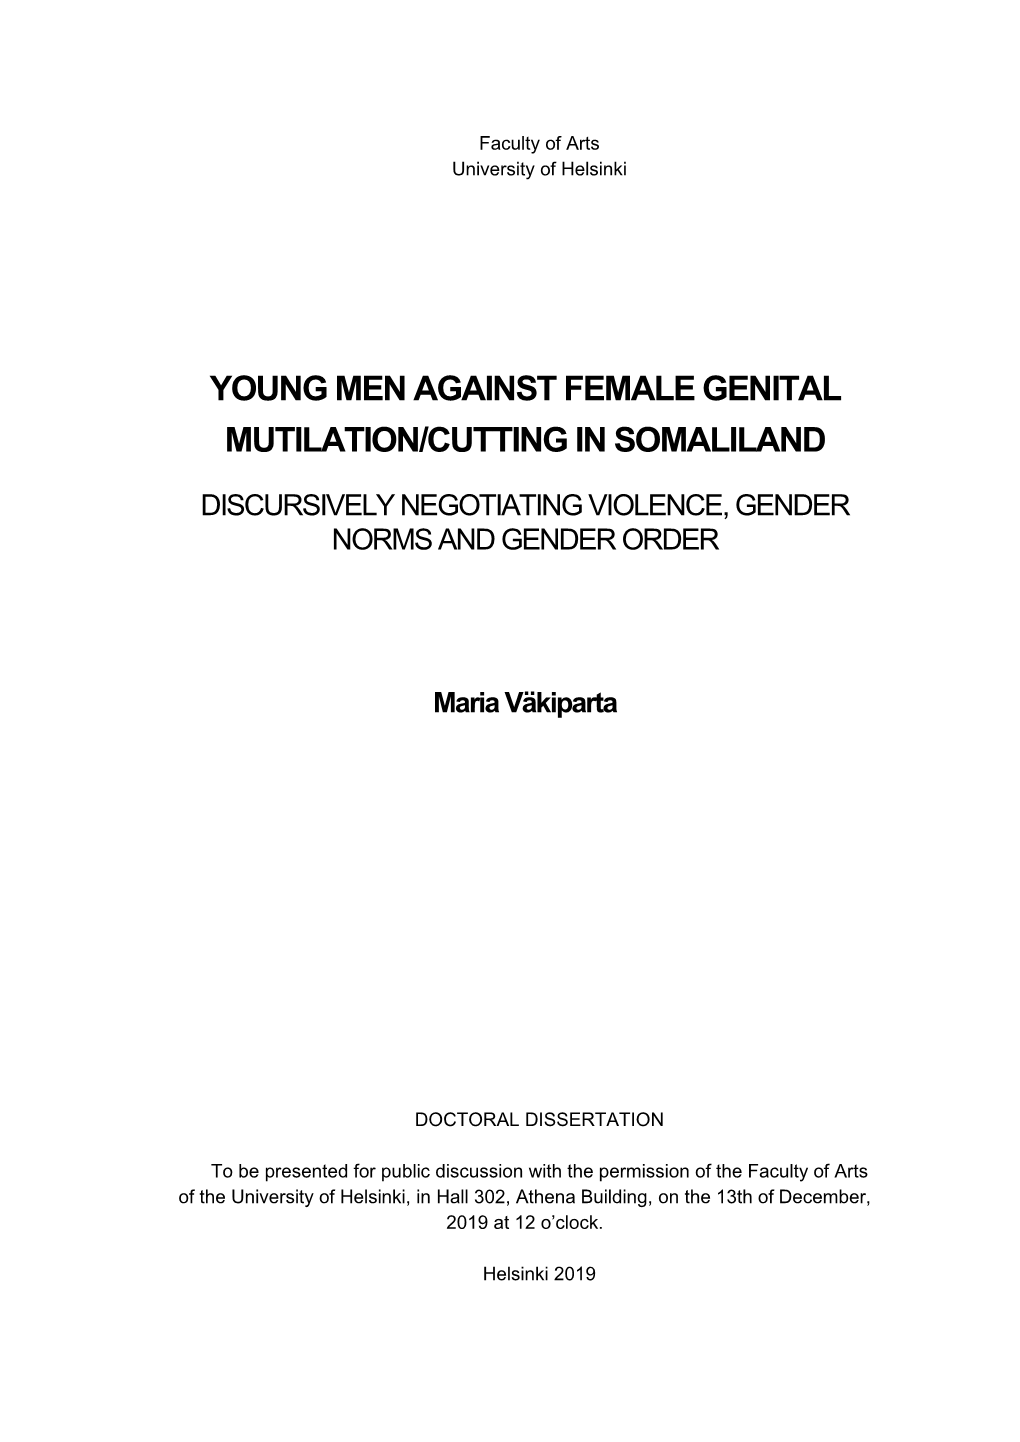 Young Men Against Female Genital Mutilation/Cutting in Somaliland